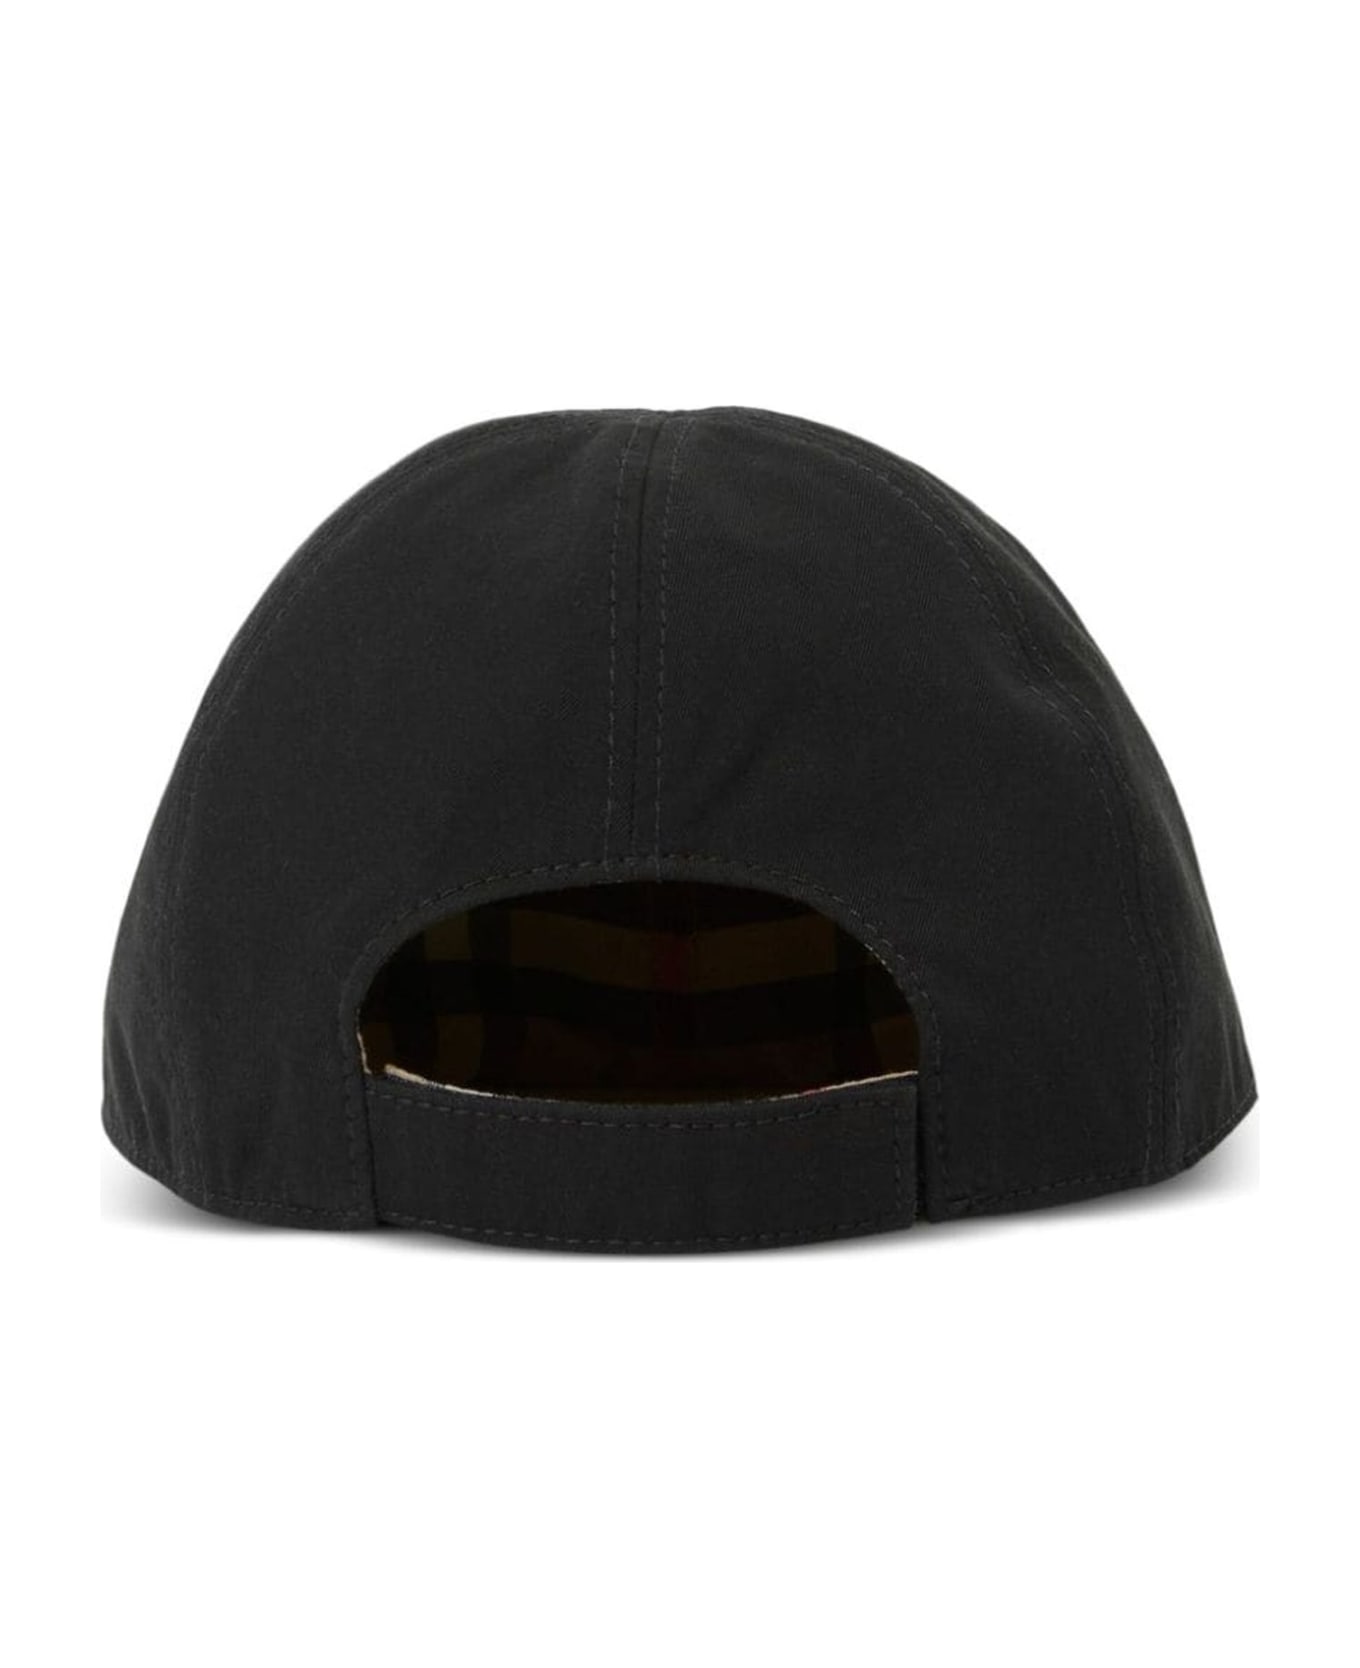 Burberry Kids Hats Black - Black